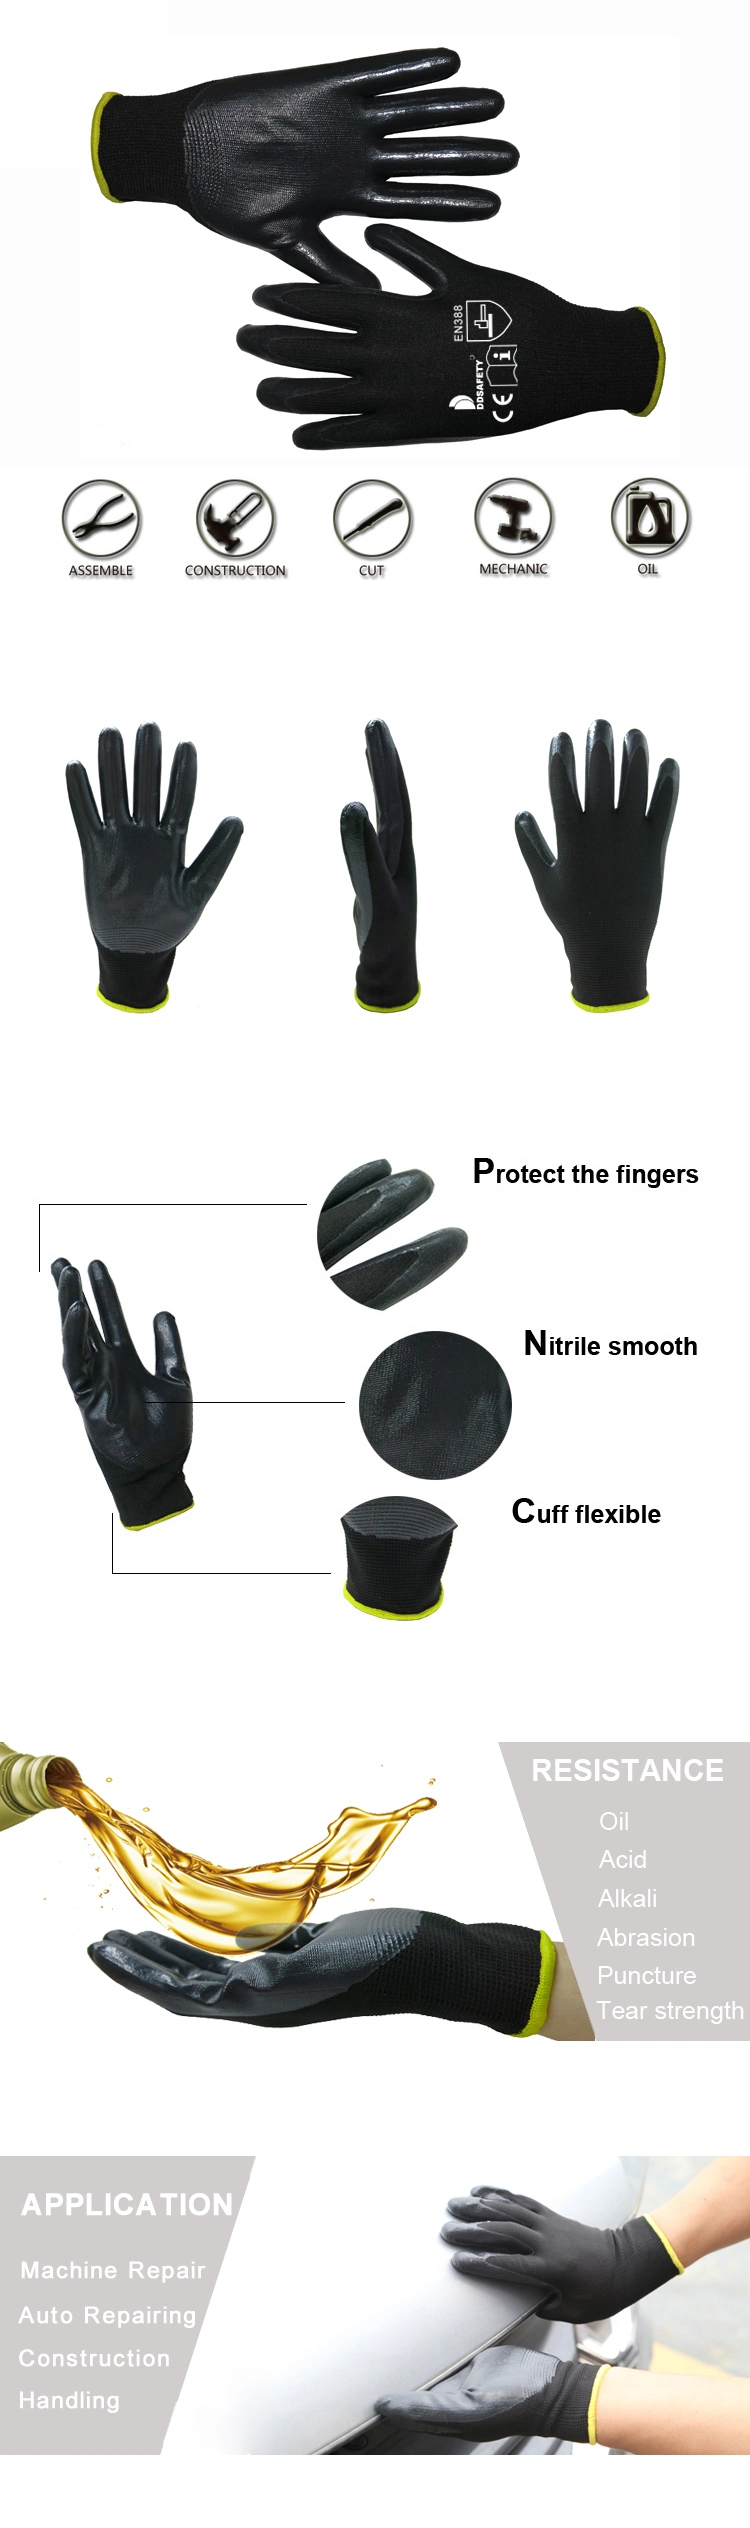 Ddsafety 13 Gauge Black Nylon Shell with Black Nitrile Coating Gloves Smooth Finished